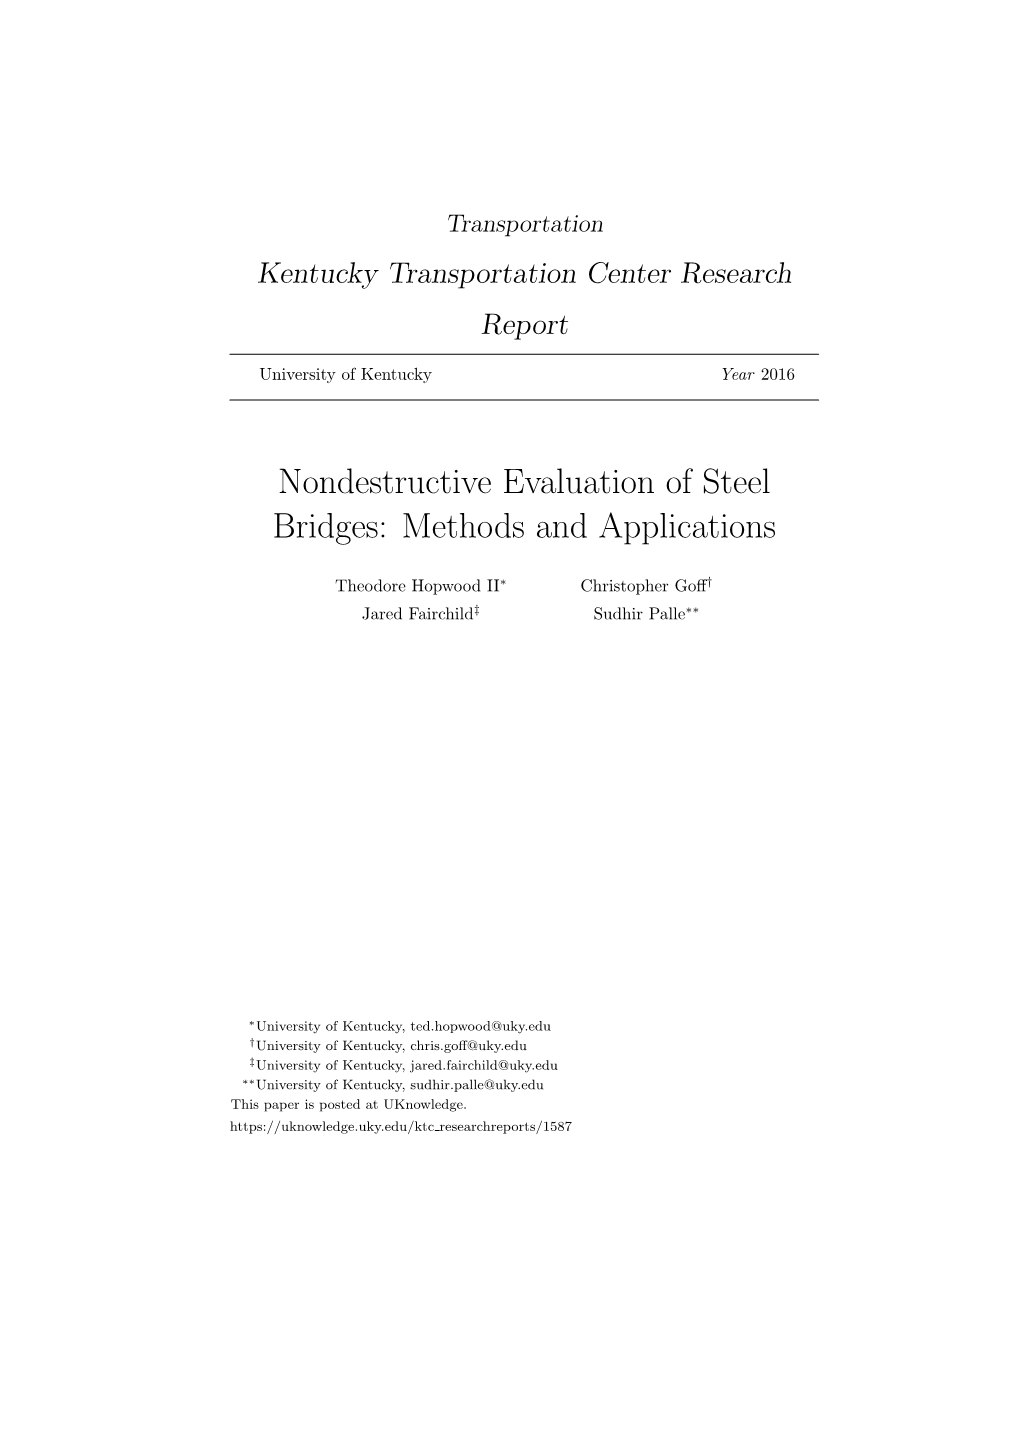 Nondestructive Evaluation of Steel Bridges: Methods and Applications